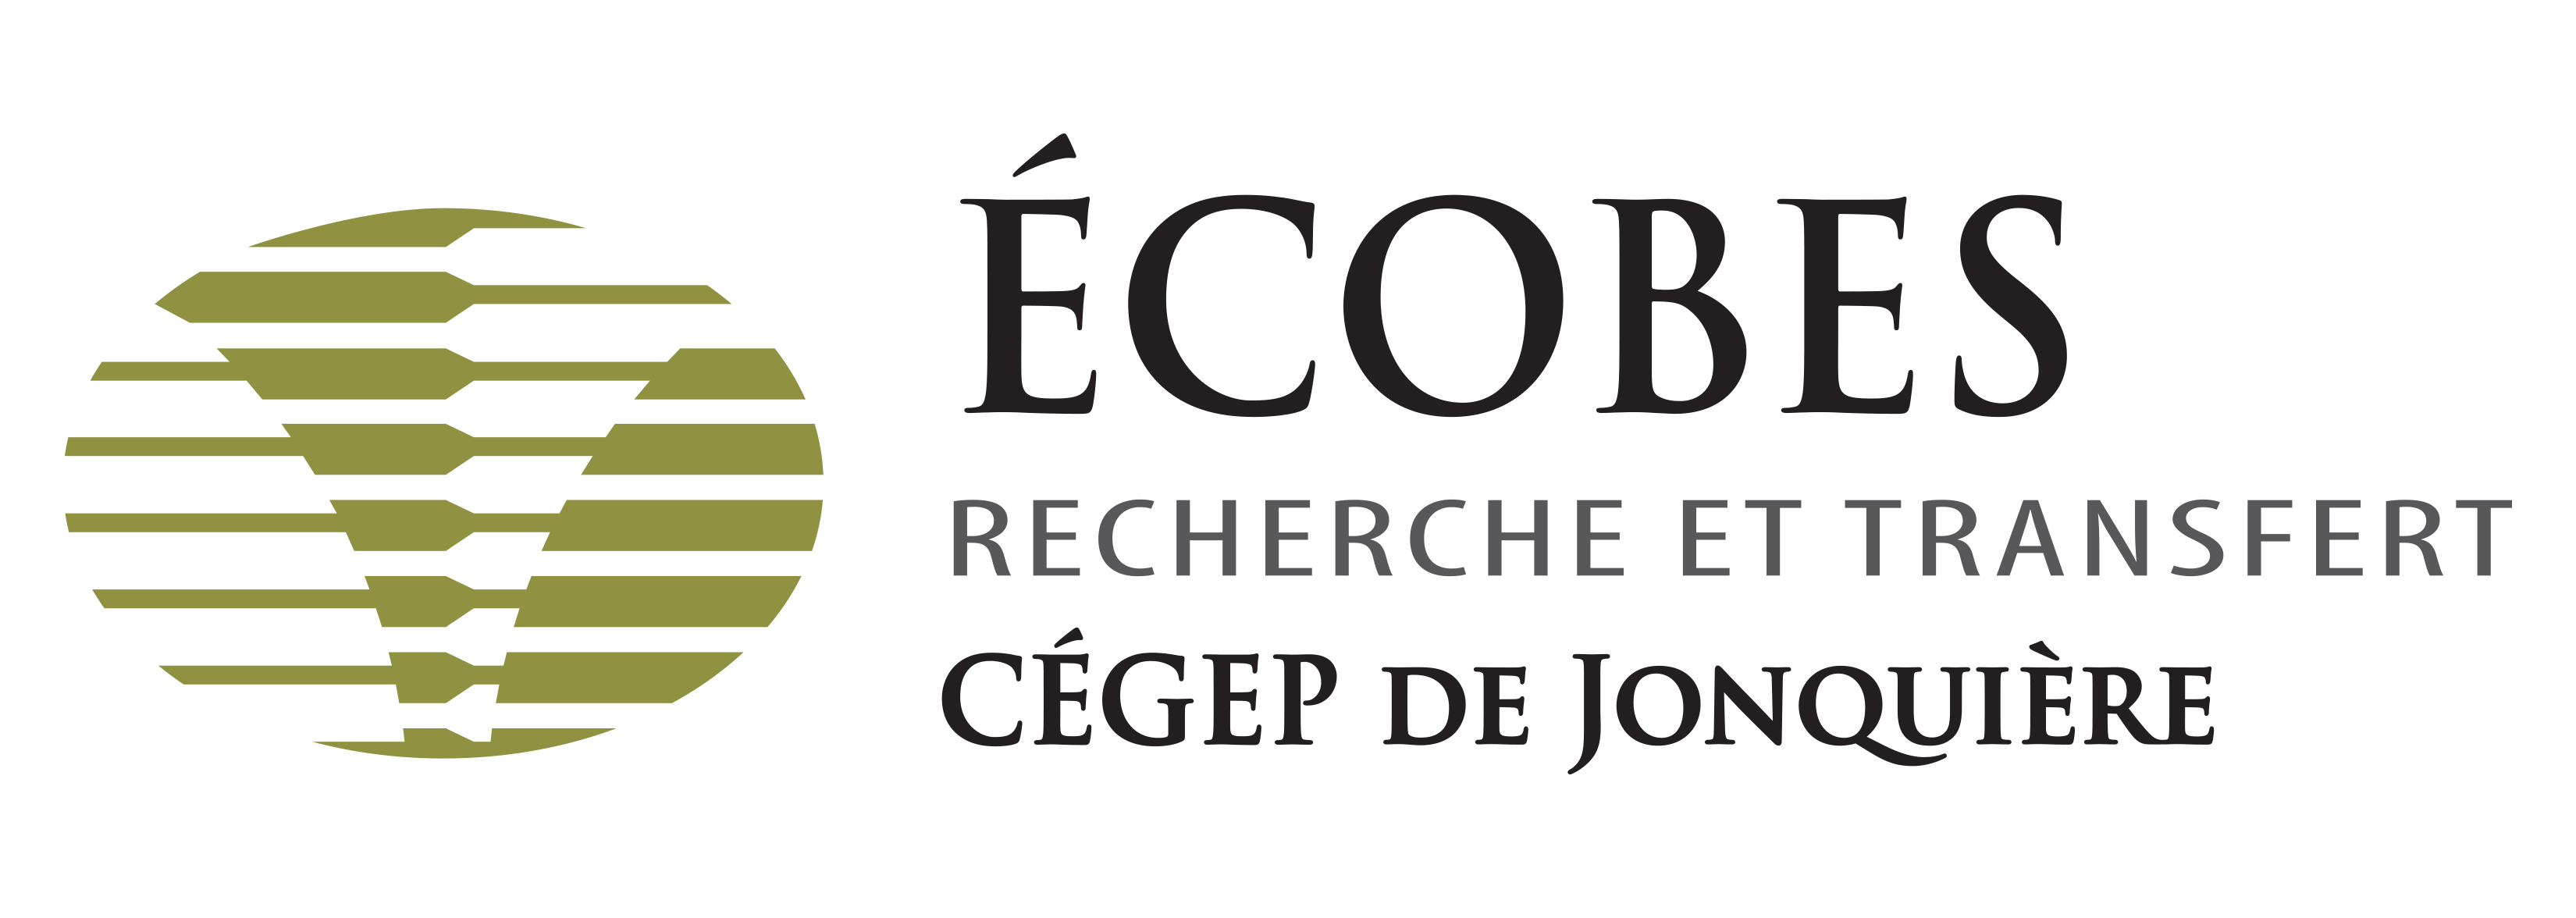 Logo ÉCOBES